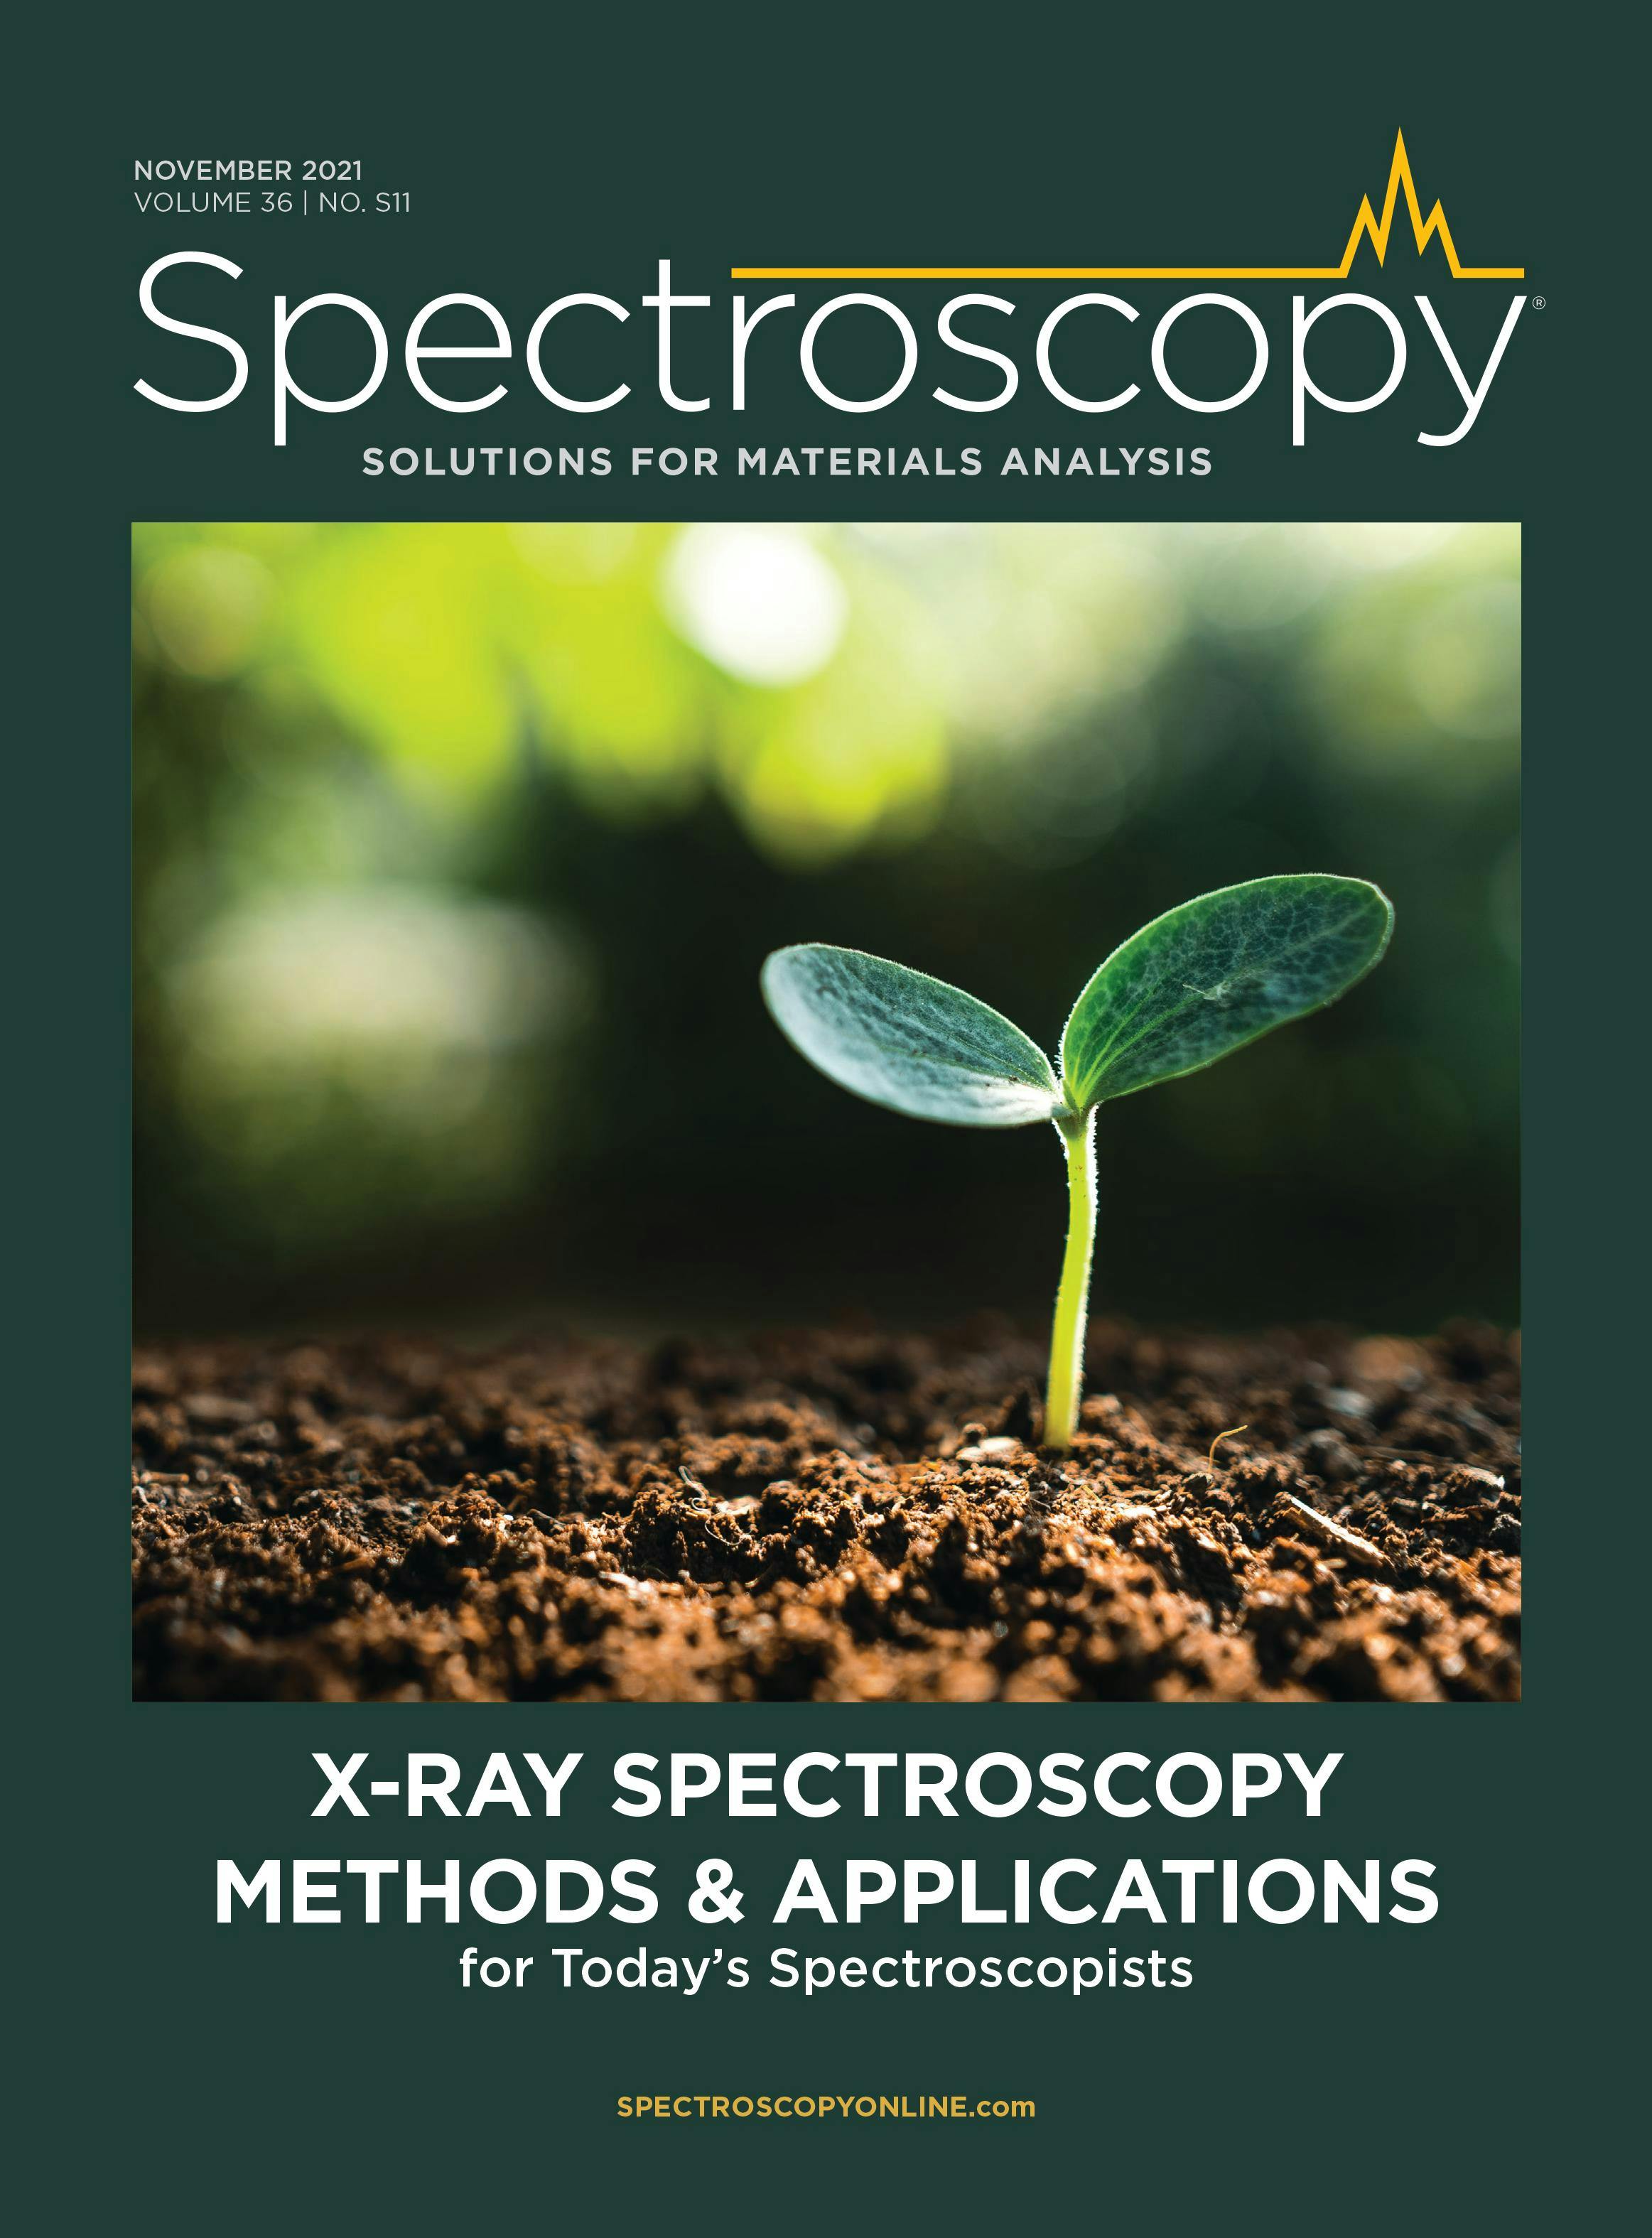 X-ray Spectroscopy Methods & Applications for Today's Spectroscopists